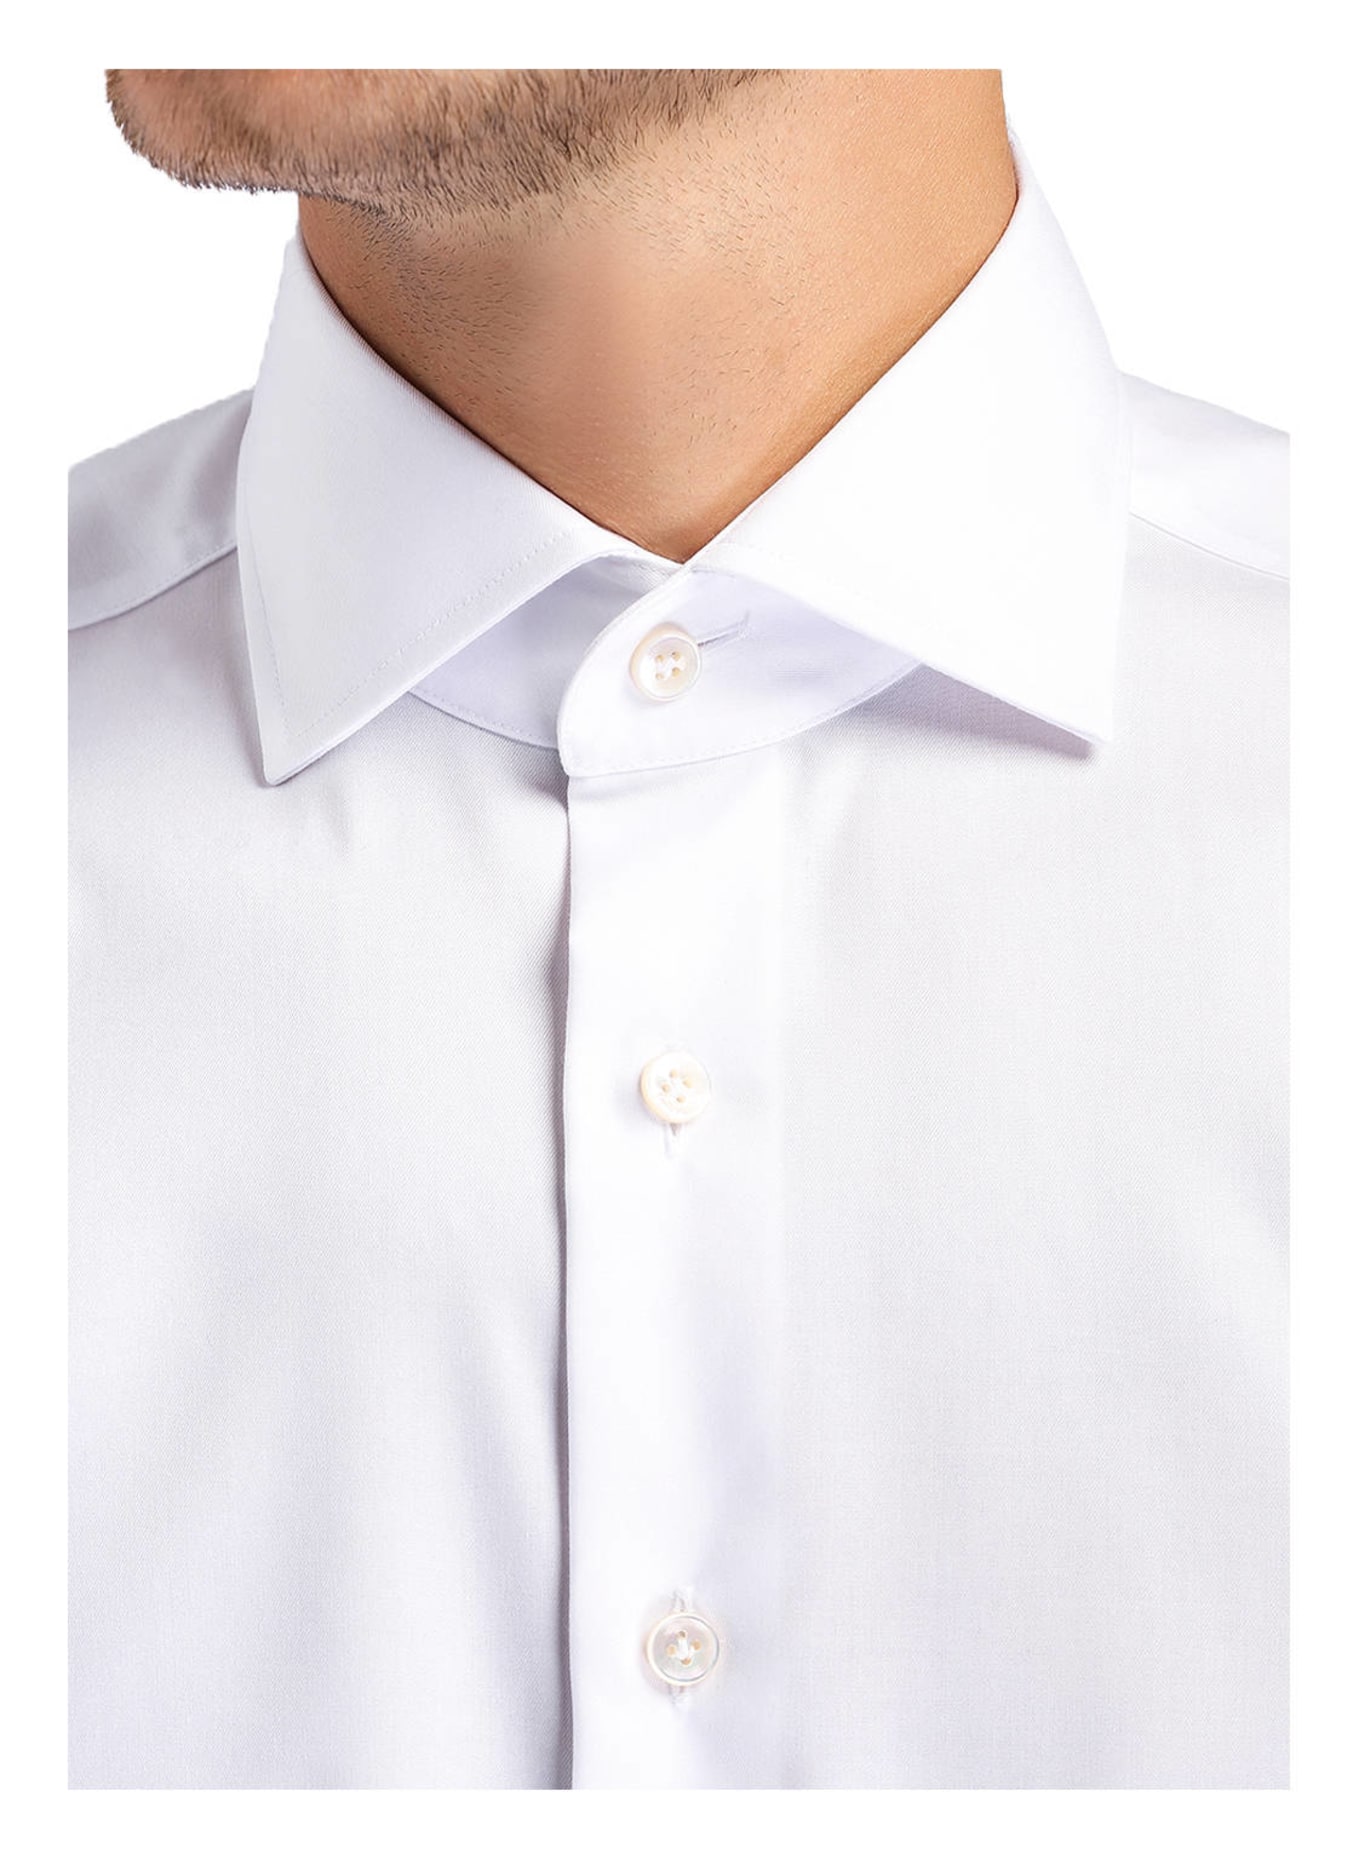 OLYMP SIGNATURE Hemd tailored fit, Farbe: WEISS (Bild 4)